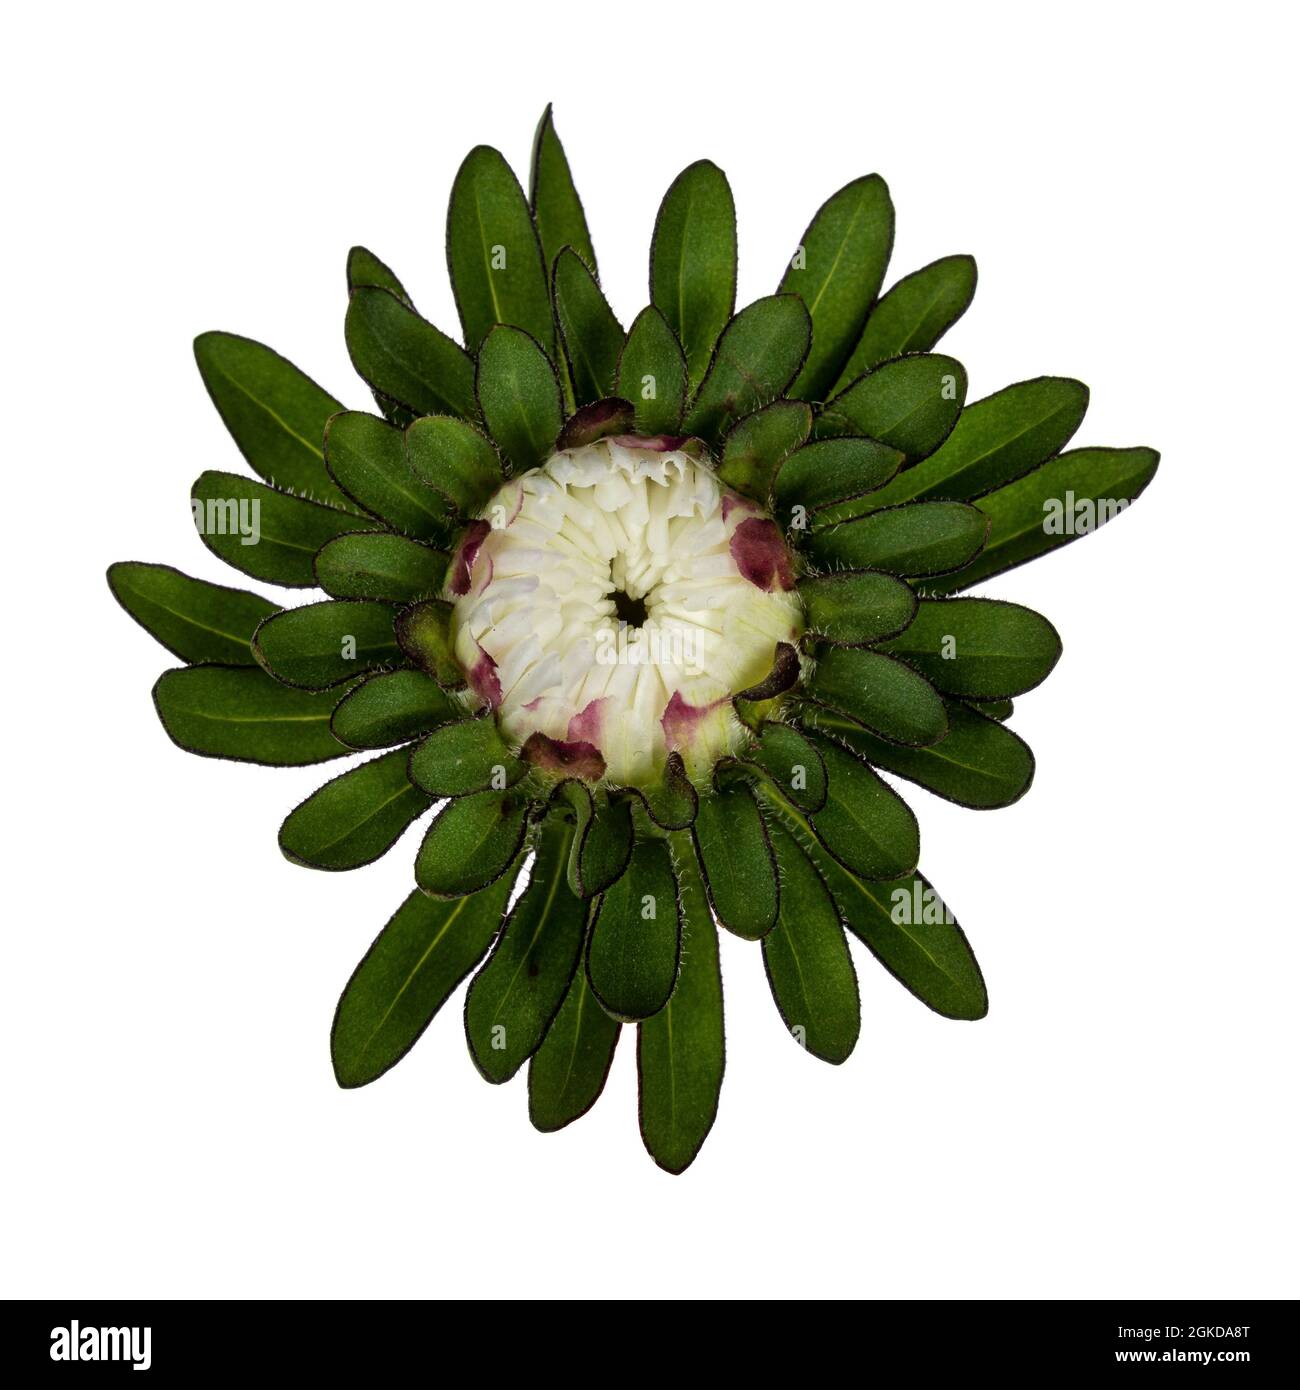 Top view of single Michaelmas Daisy aka Callistephus chinensis flower head. Isolated on a white background. Stock Photo